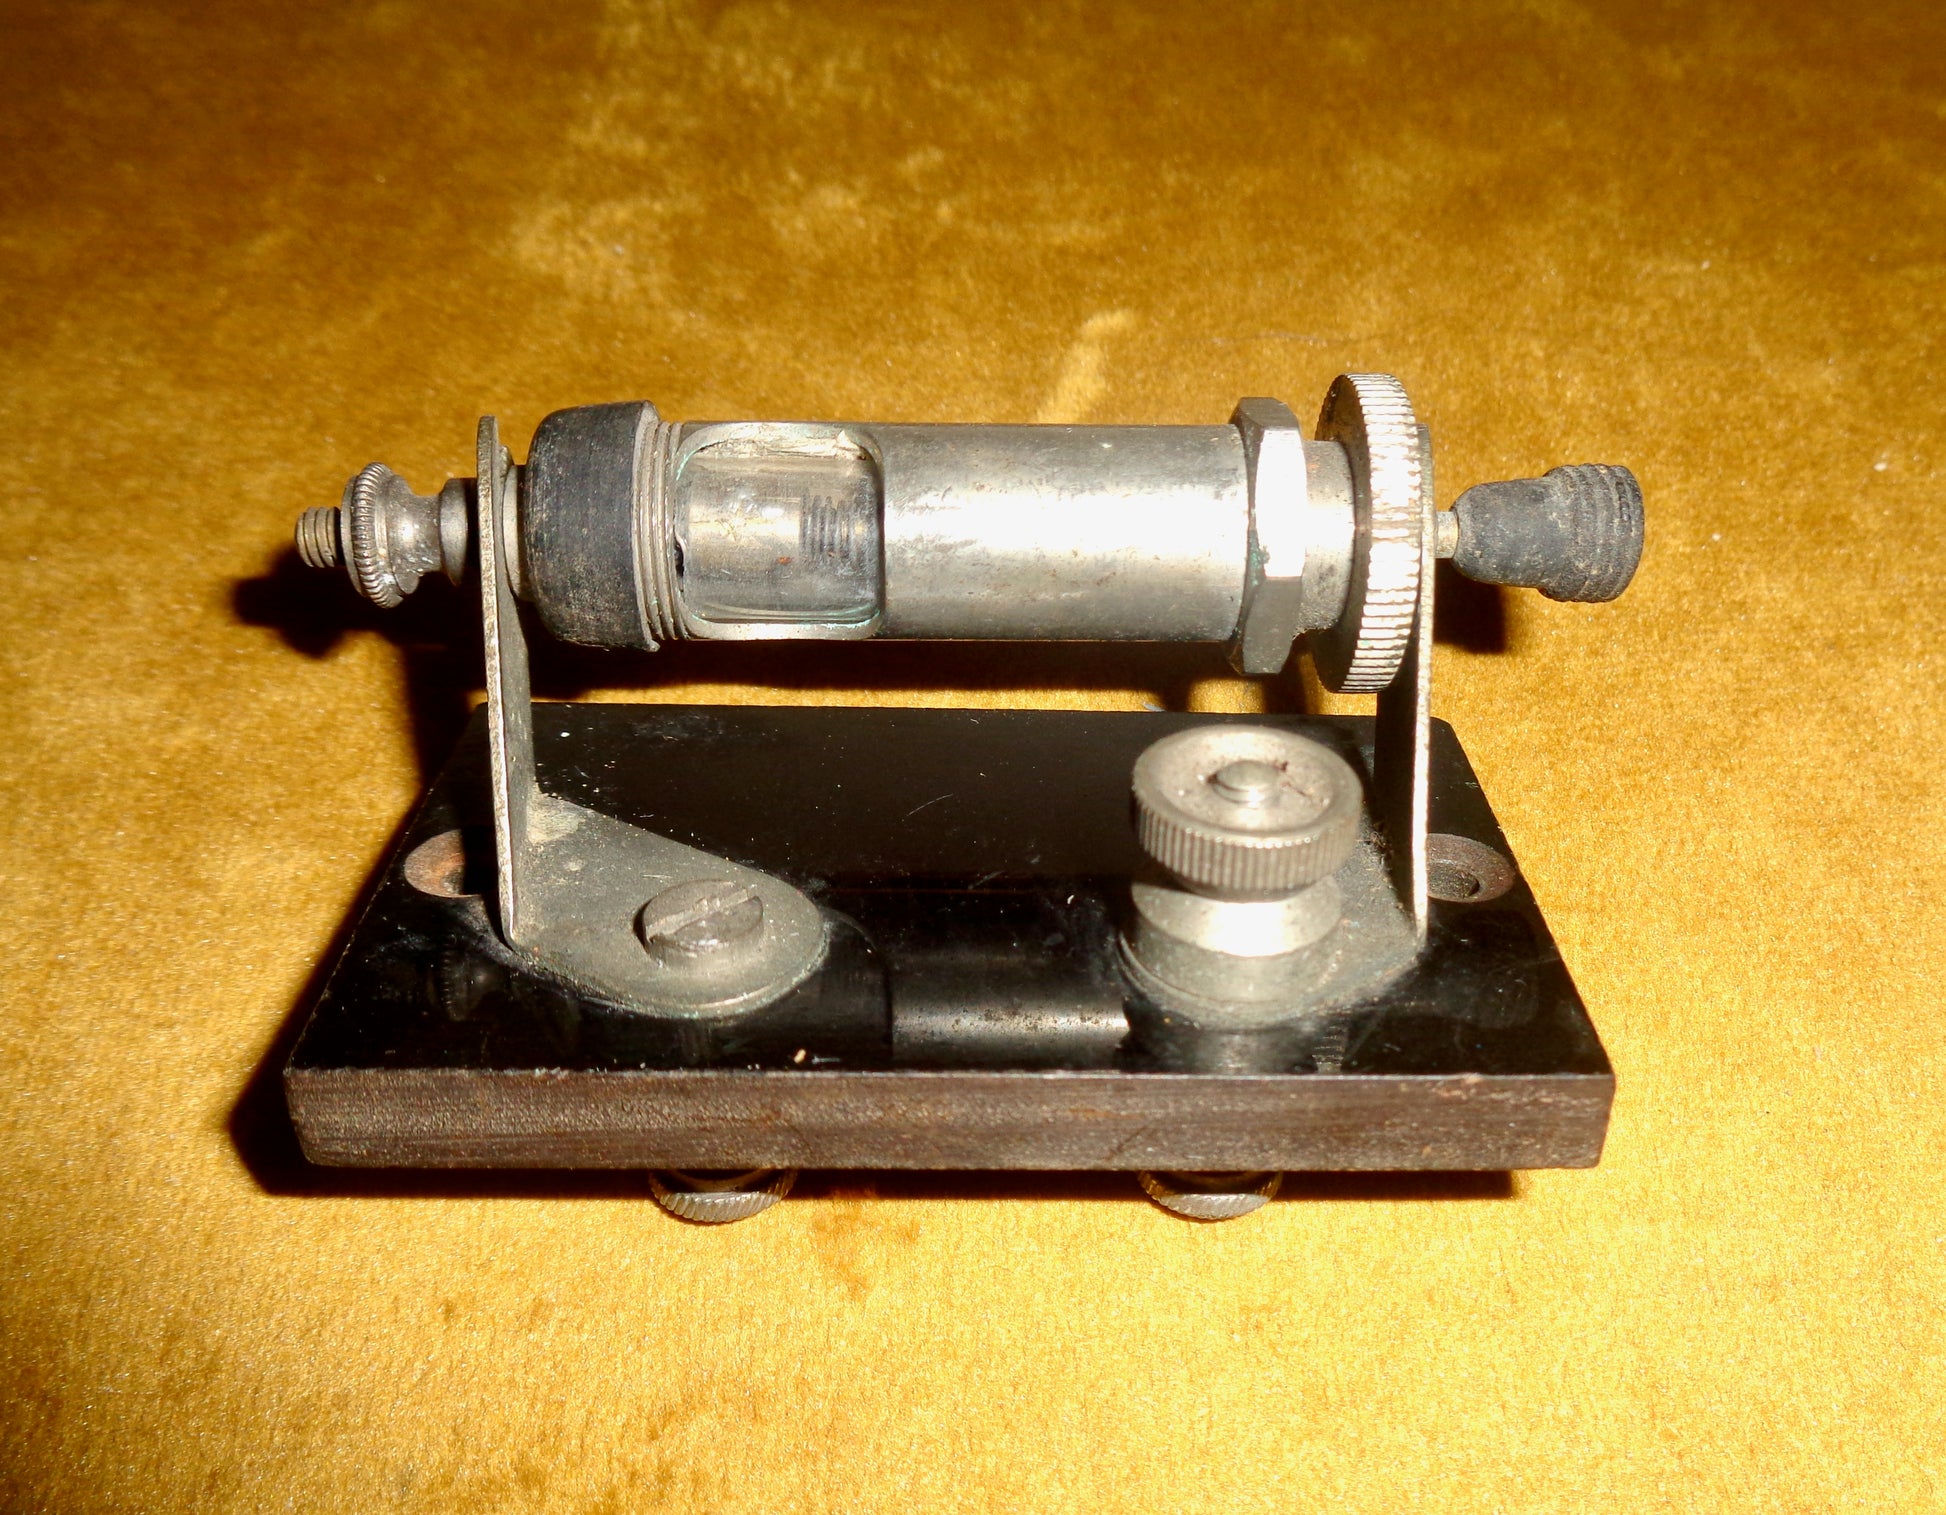 1920s Crystal Set Cat's Whisker Detector / Holder